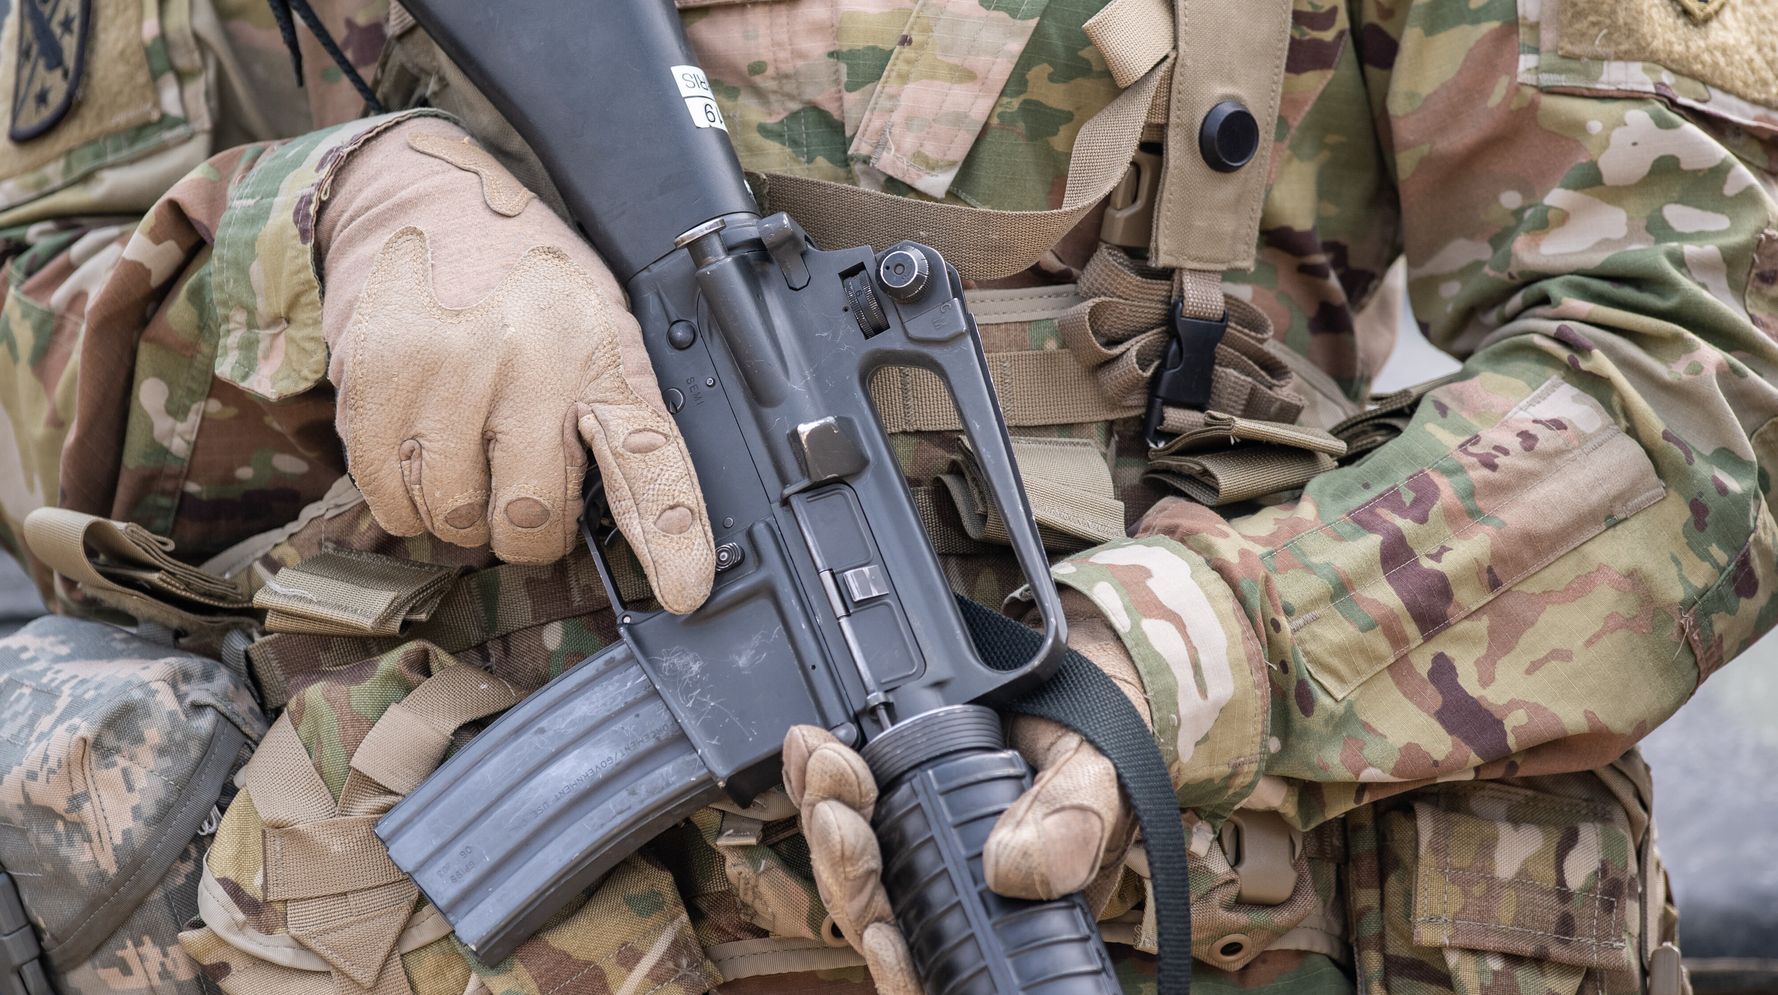 U.S. Military Guns Keep Vanishing, With Some Used In Street Crimes